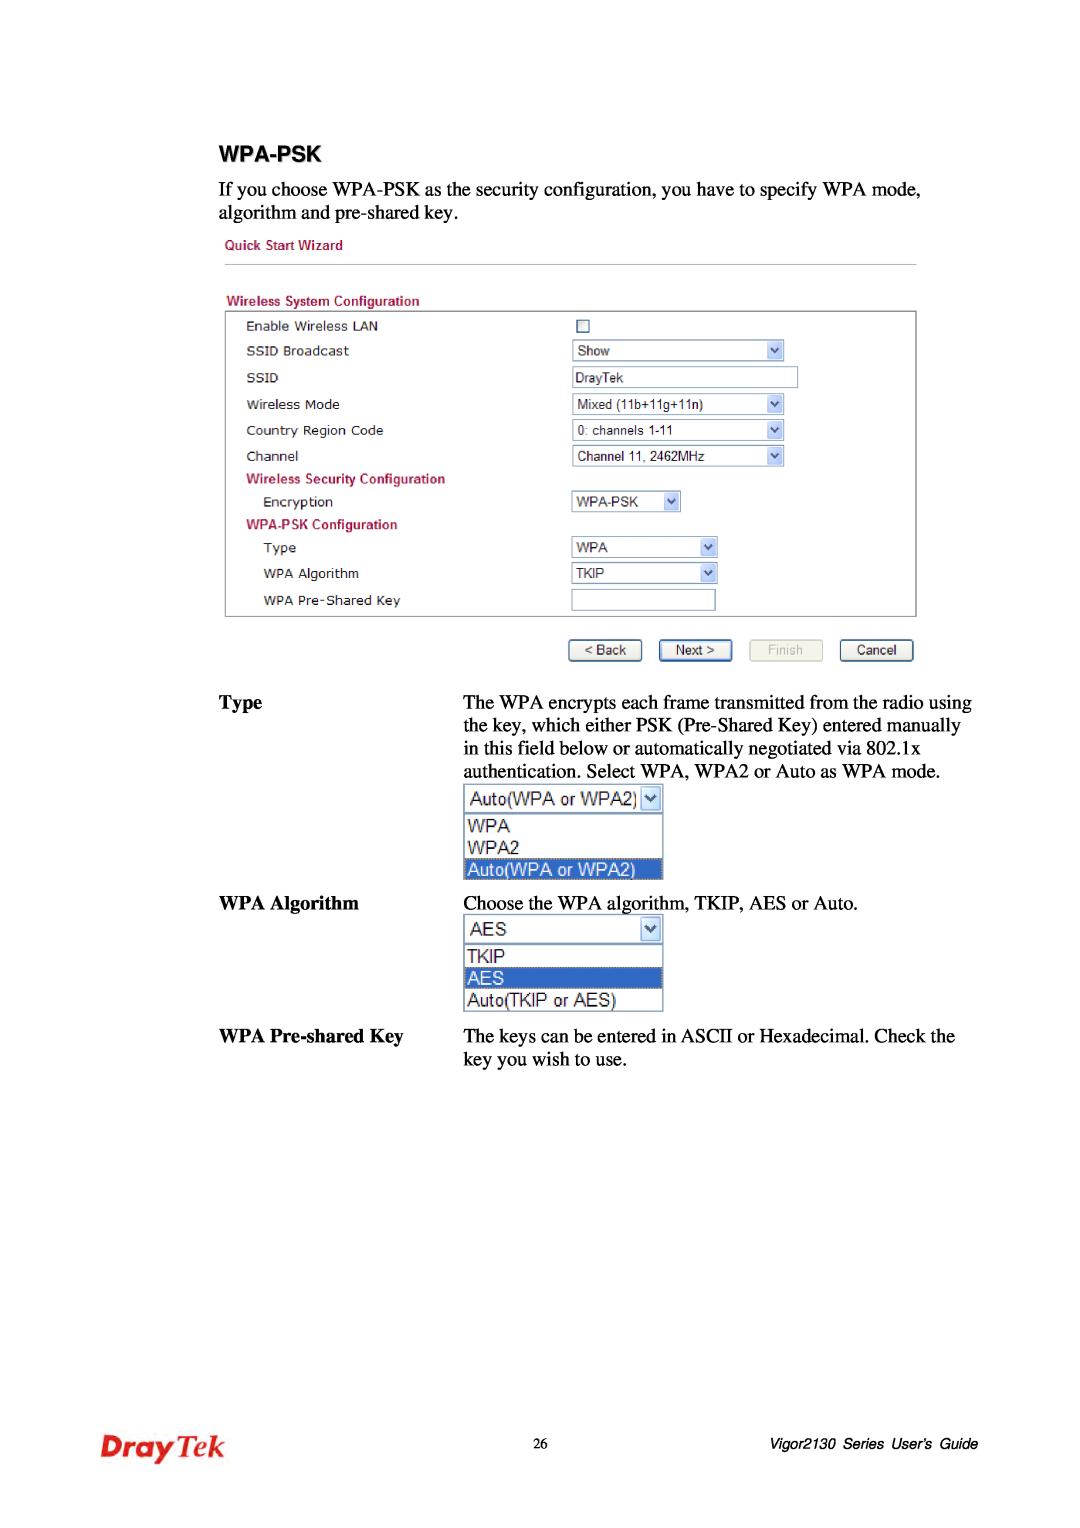 Draytek 2130 manual Wpa-Psk, Type, WPA Algorithm, WPA Pre-shared Key, key you wish to use 